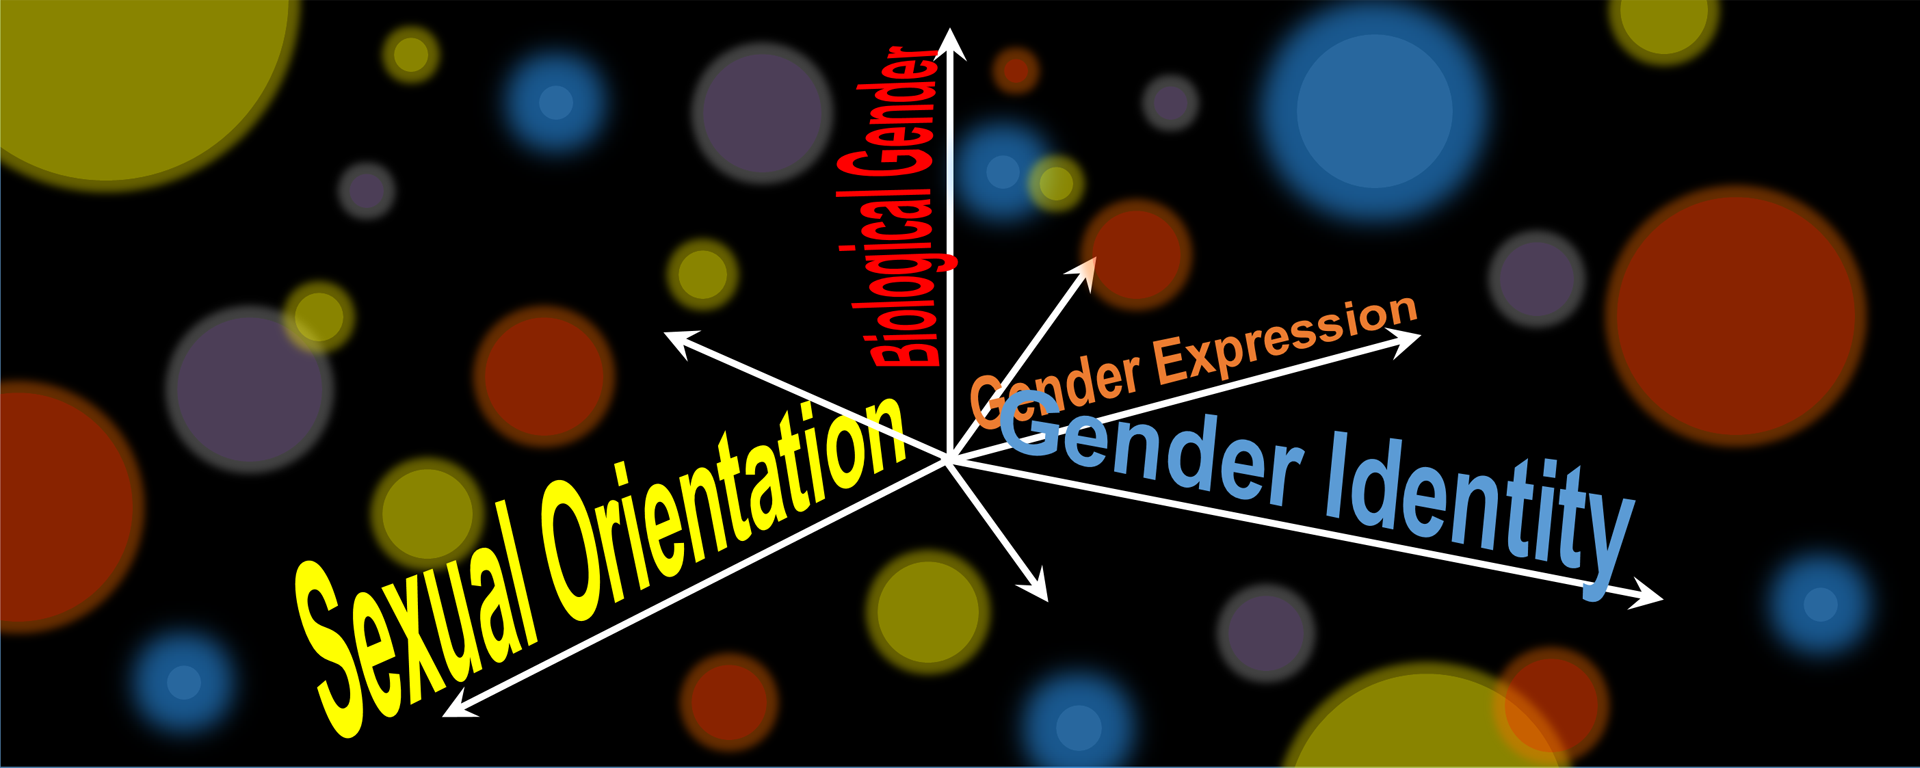 Understanding Gender Identity and Gender Expression | SUNY 